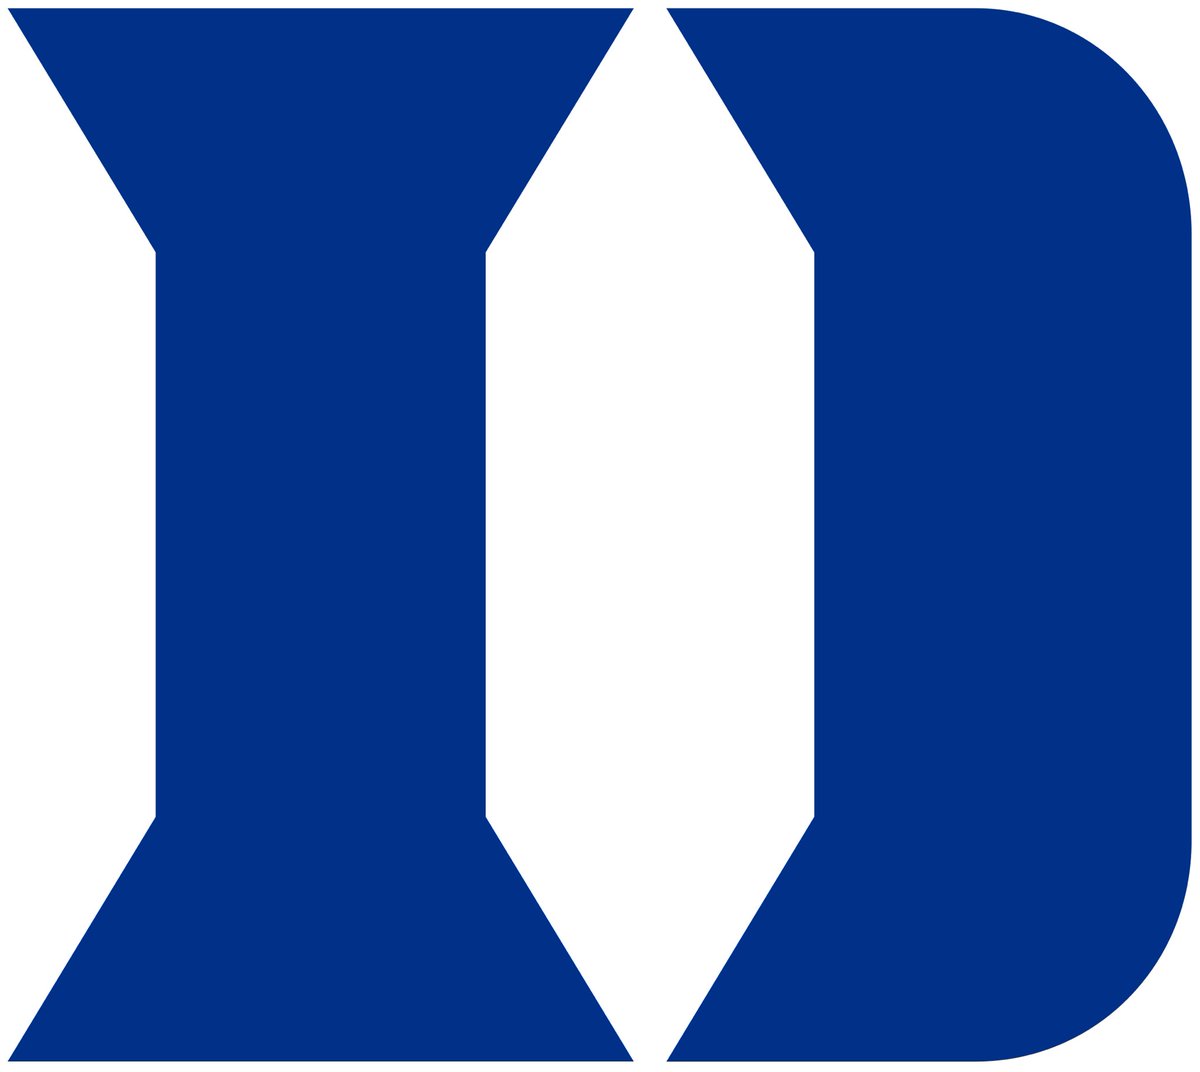 I’m blessed to receive an offer from Duke University! Go Blue Devils💙🤍